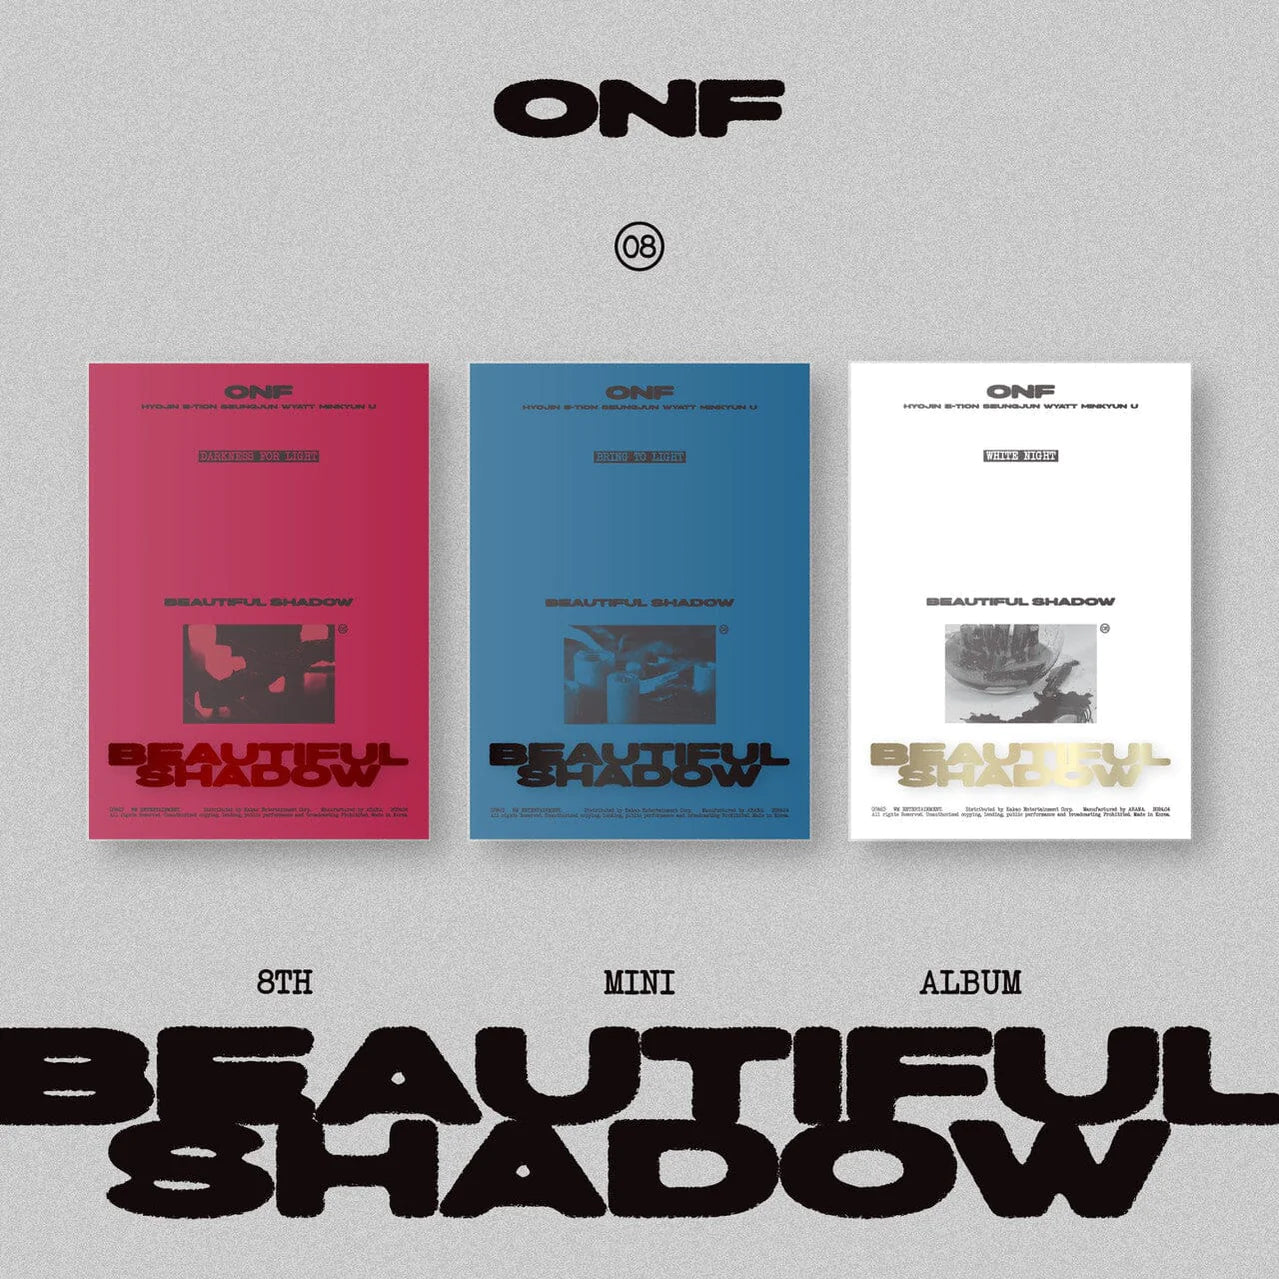 onf-beautiful-shadow-8th-mini-album-nolae-265381_1279x1279.webp__PID:824398ad-2994-44e9-aee0-425afb1aae64